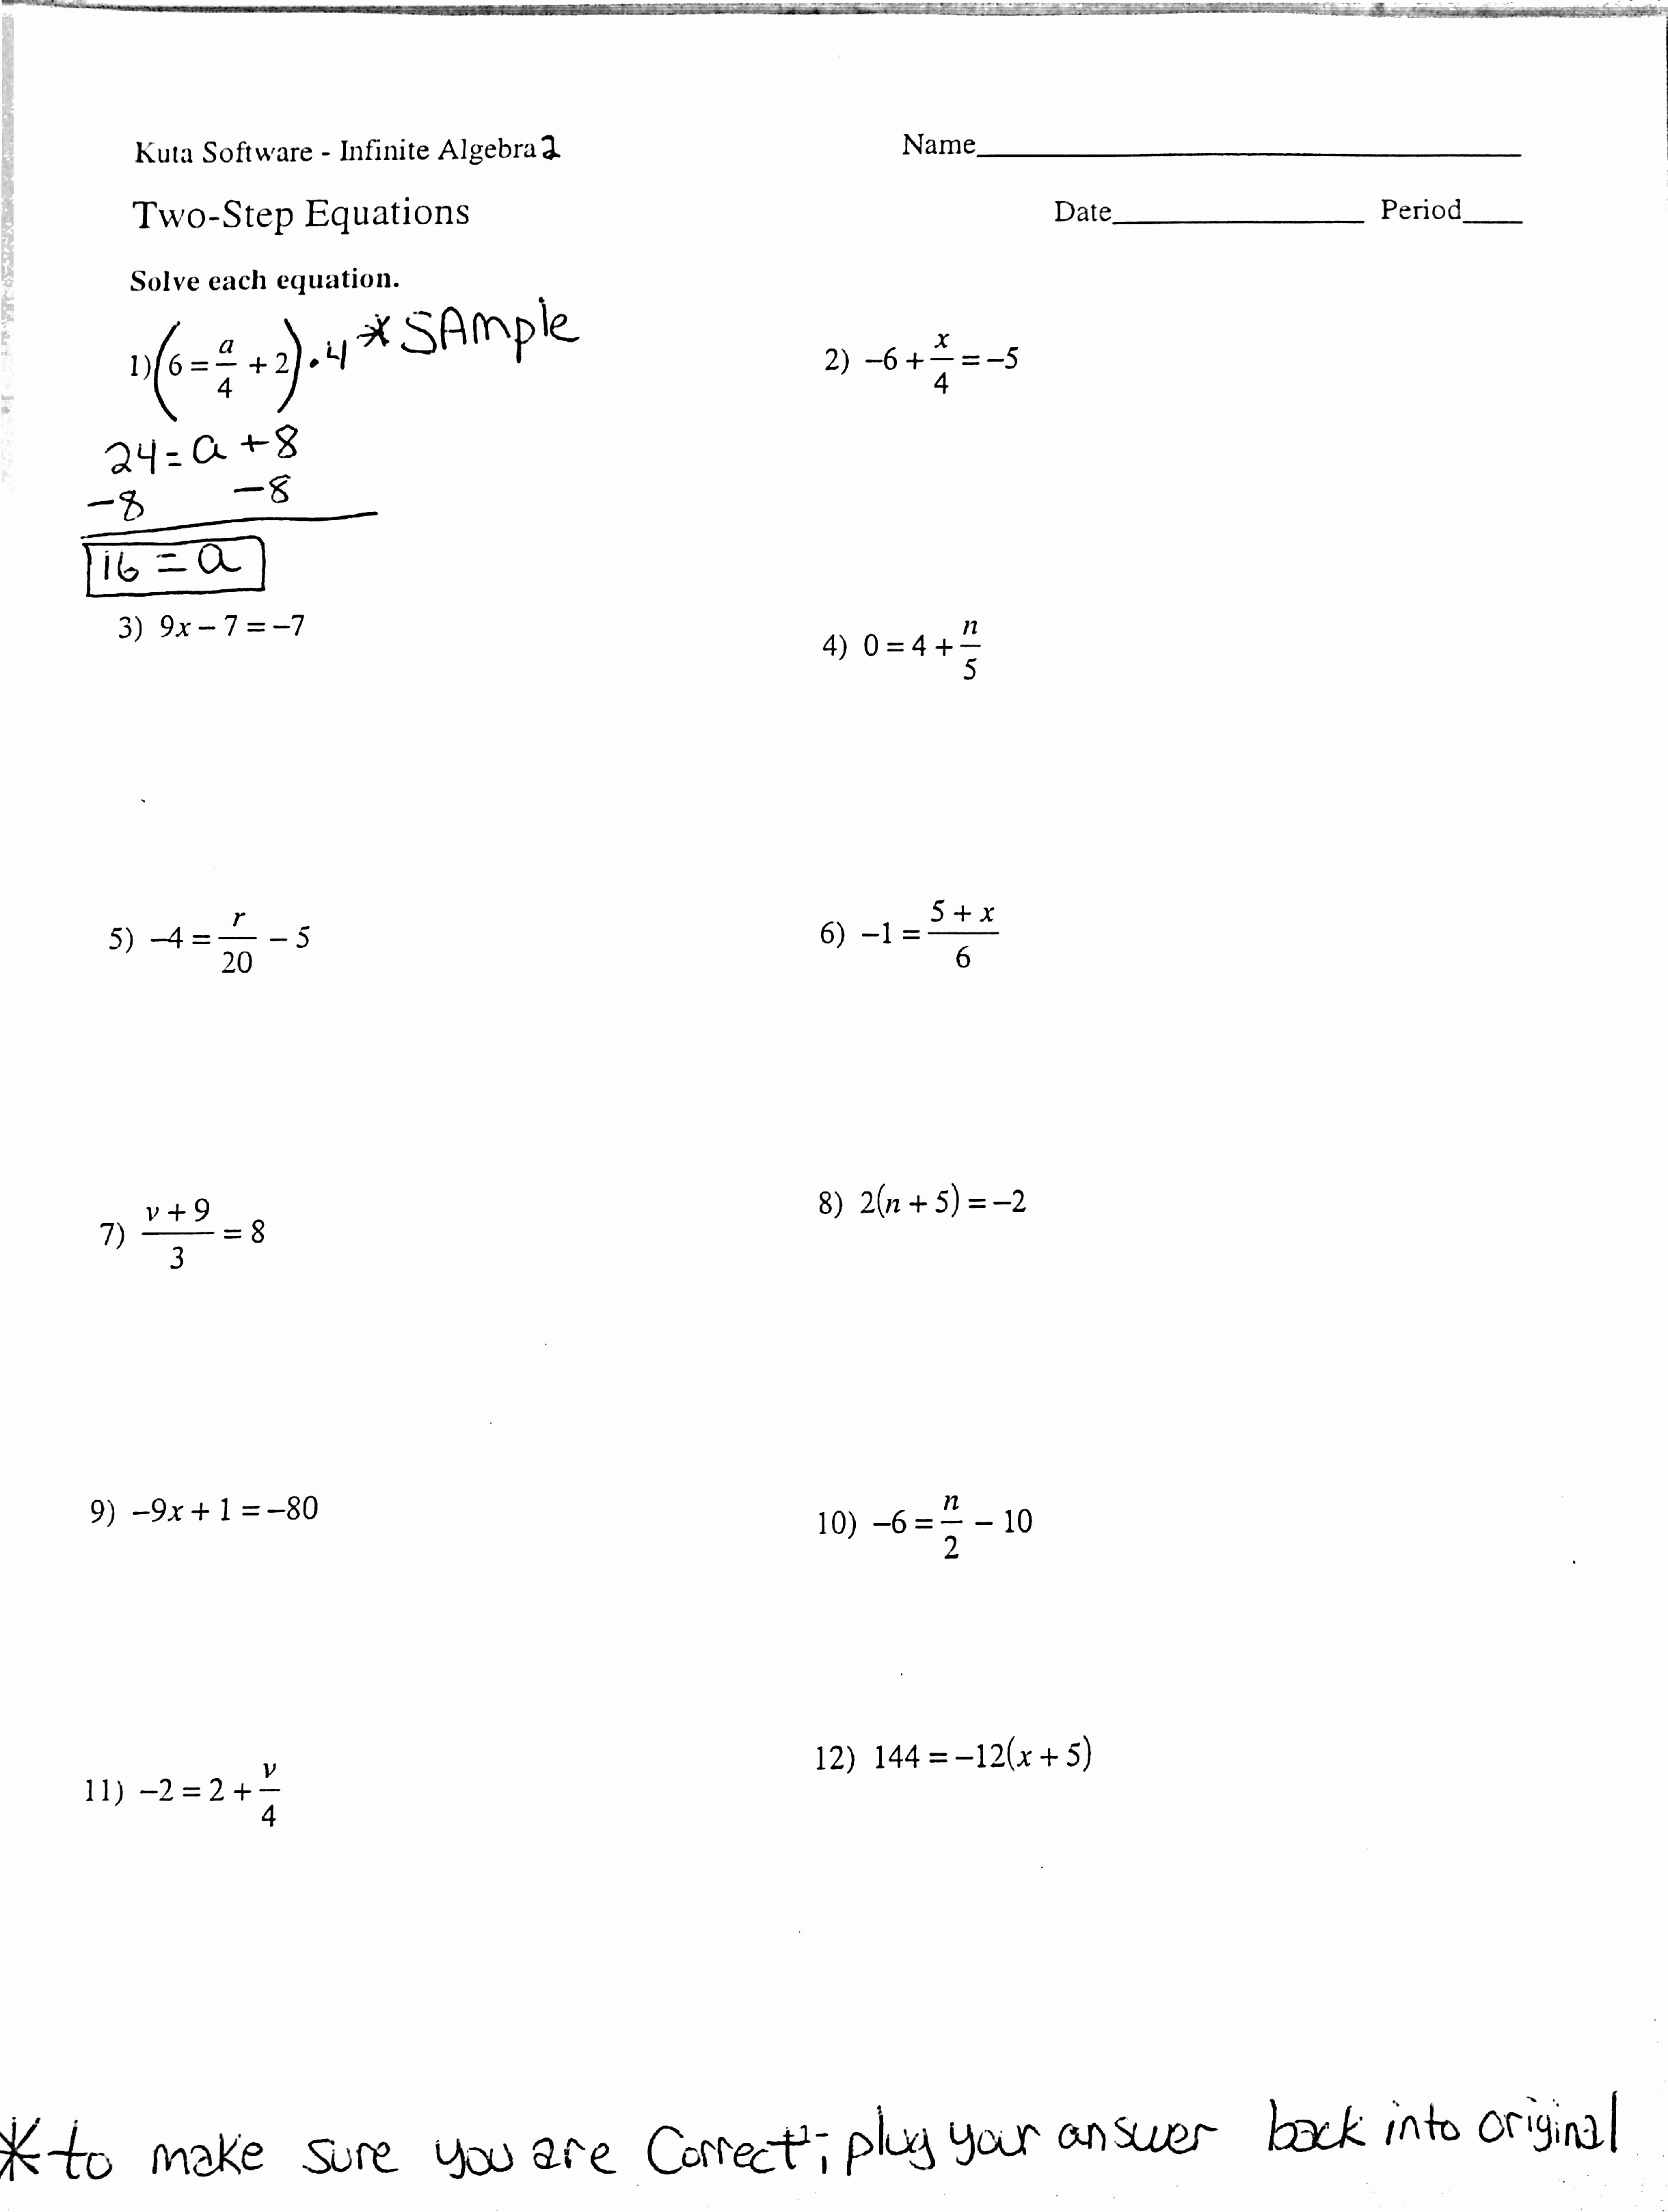 smalltalkwitht-download-4th-grade-math-worksheets-gif-pin-on-math